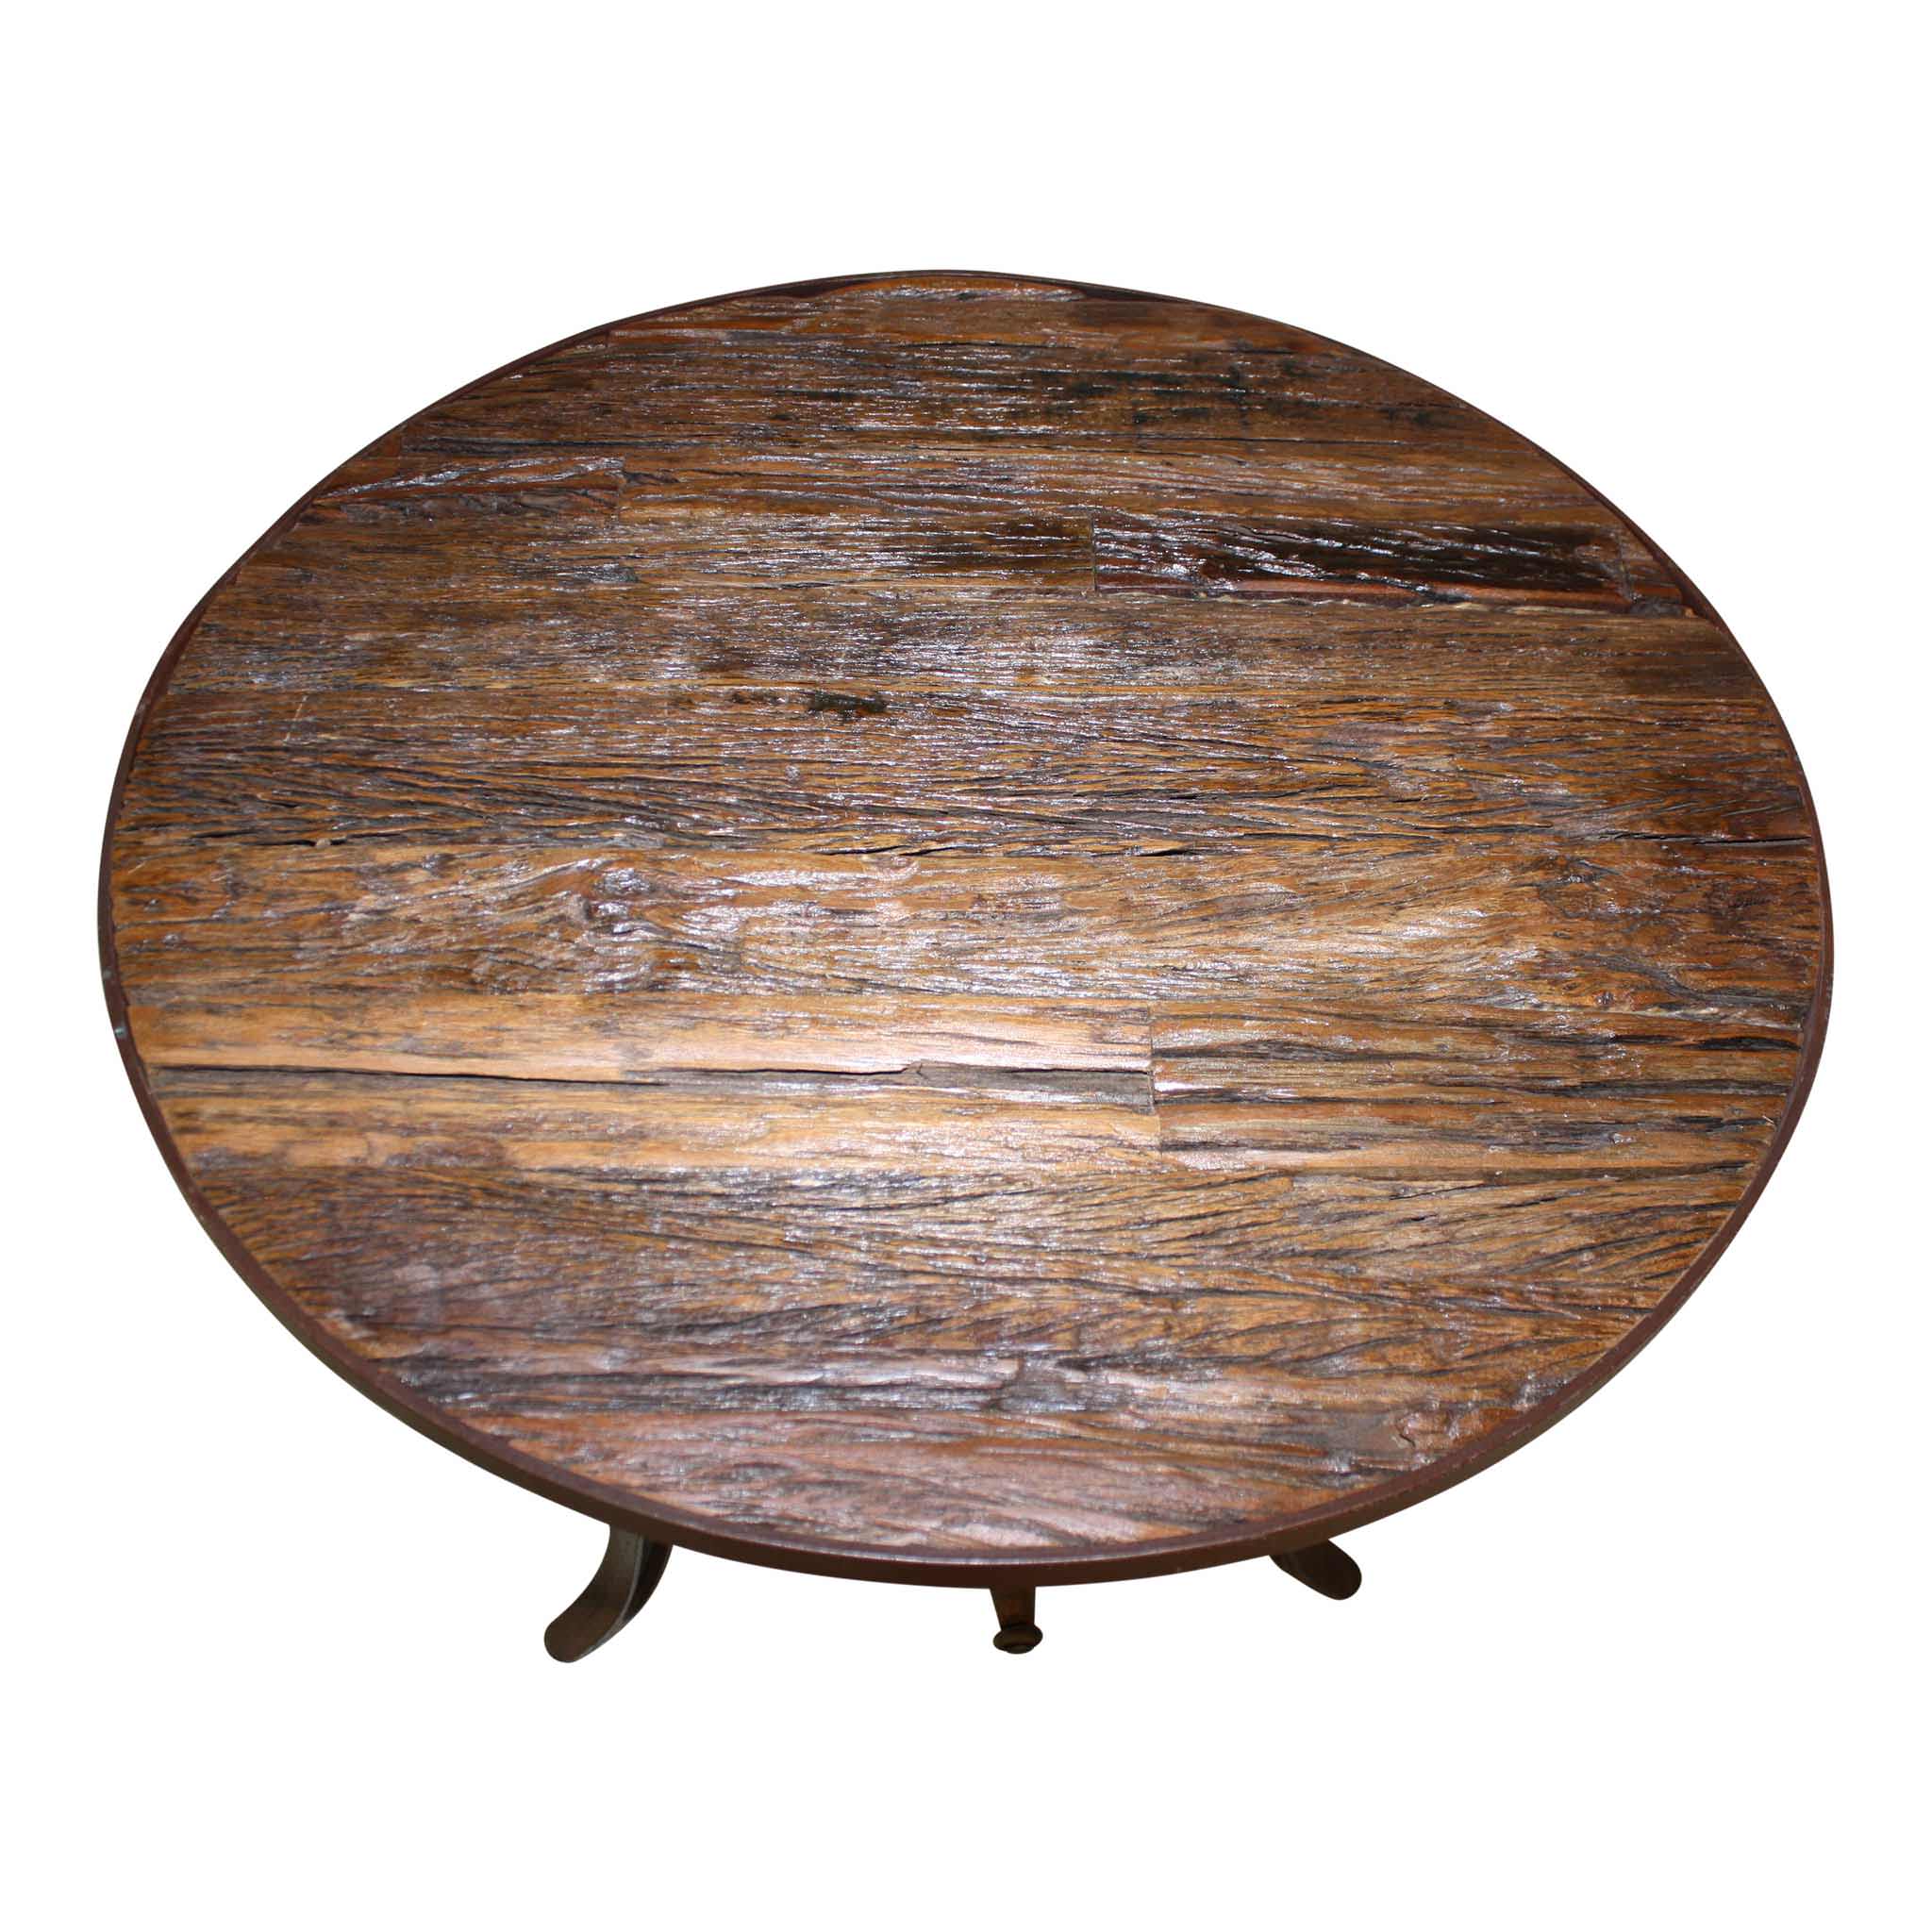 Vintage Industrial Bistro Table